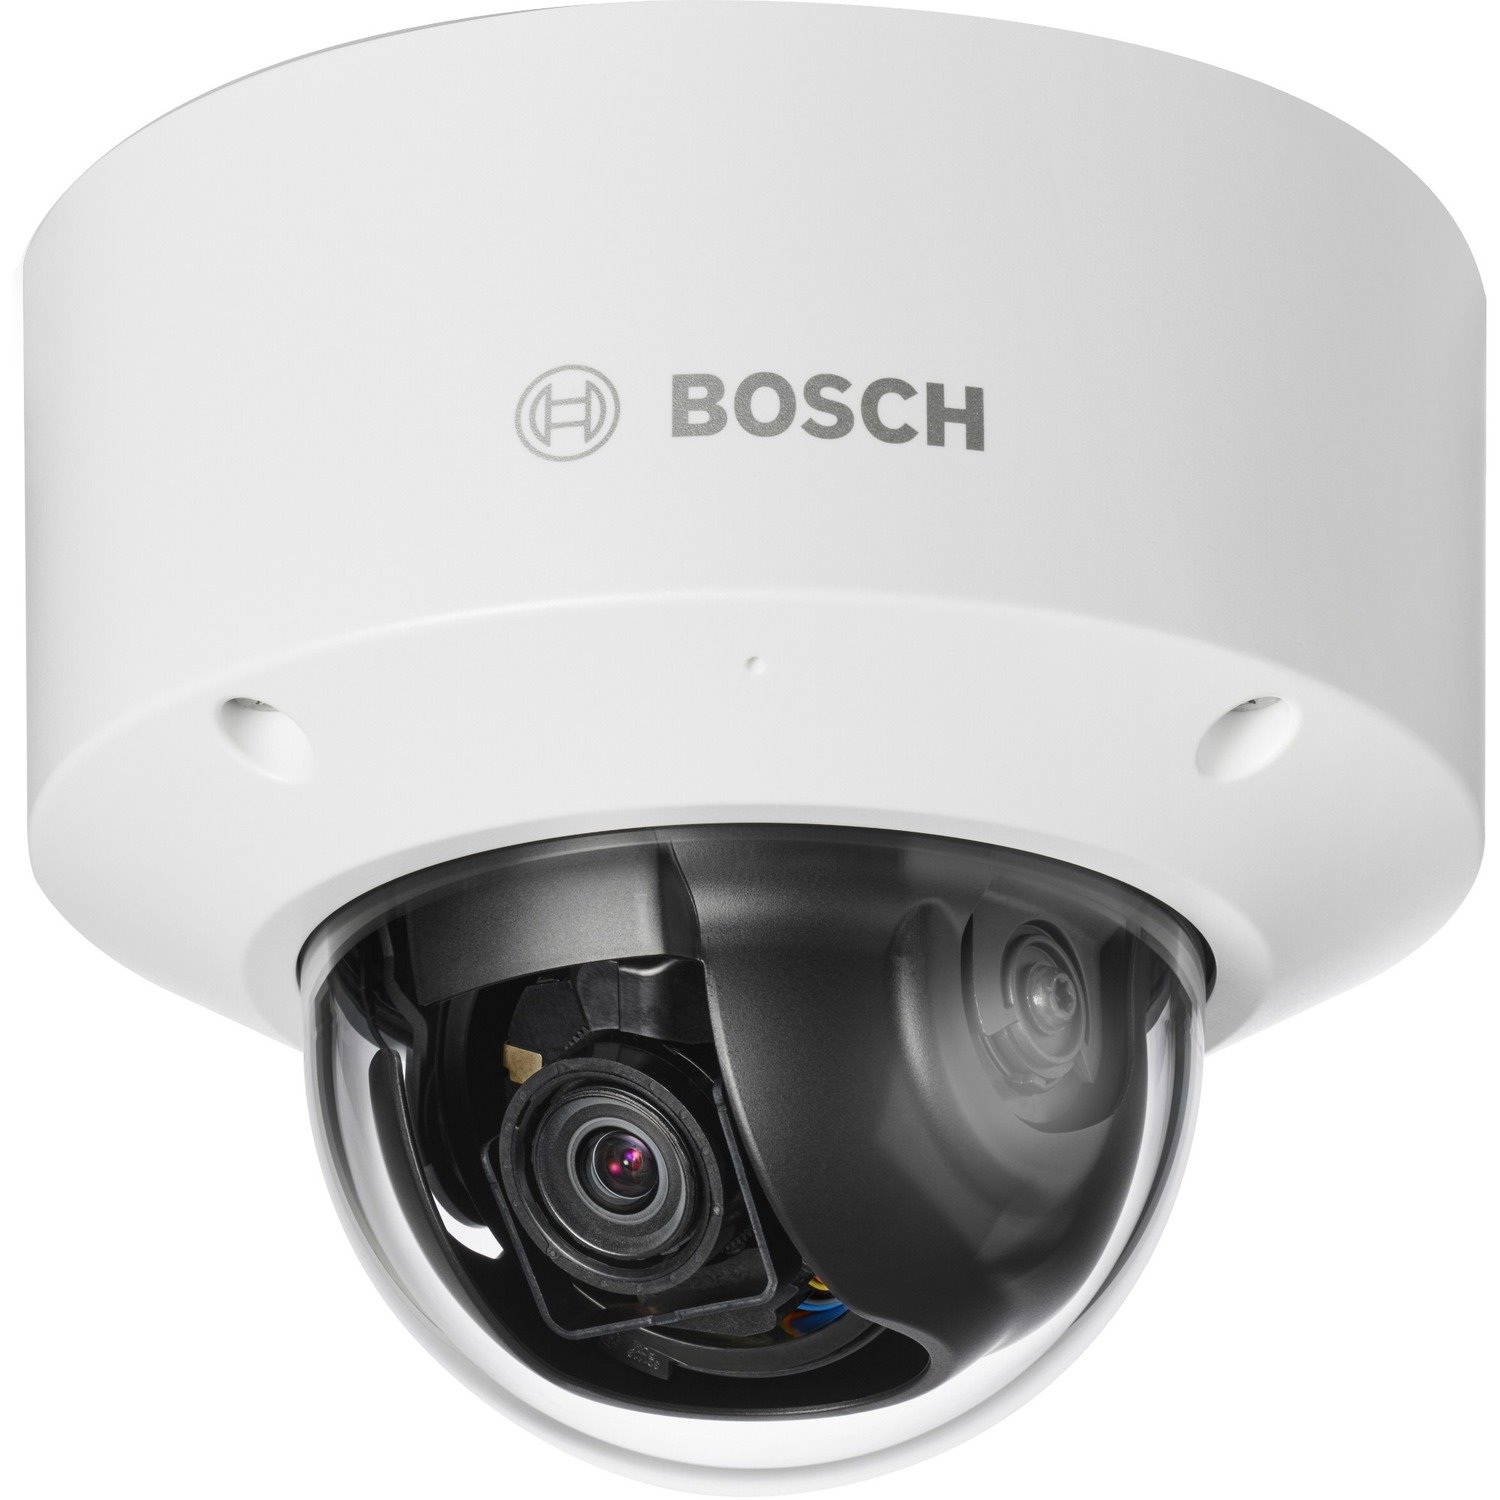 Bosch FLEXIDOME IP NDV-8502-R 2 Megapixel Indoor Full HD Network Camera - Color, Monochrome - Dome